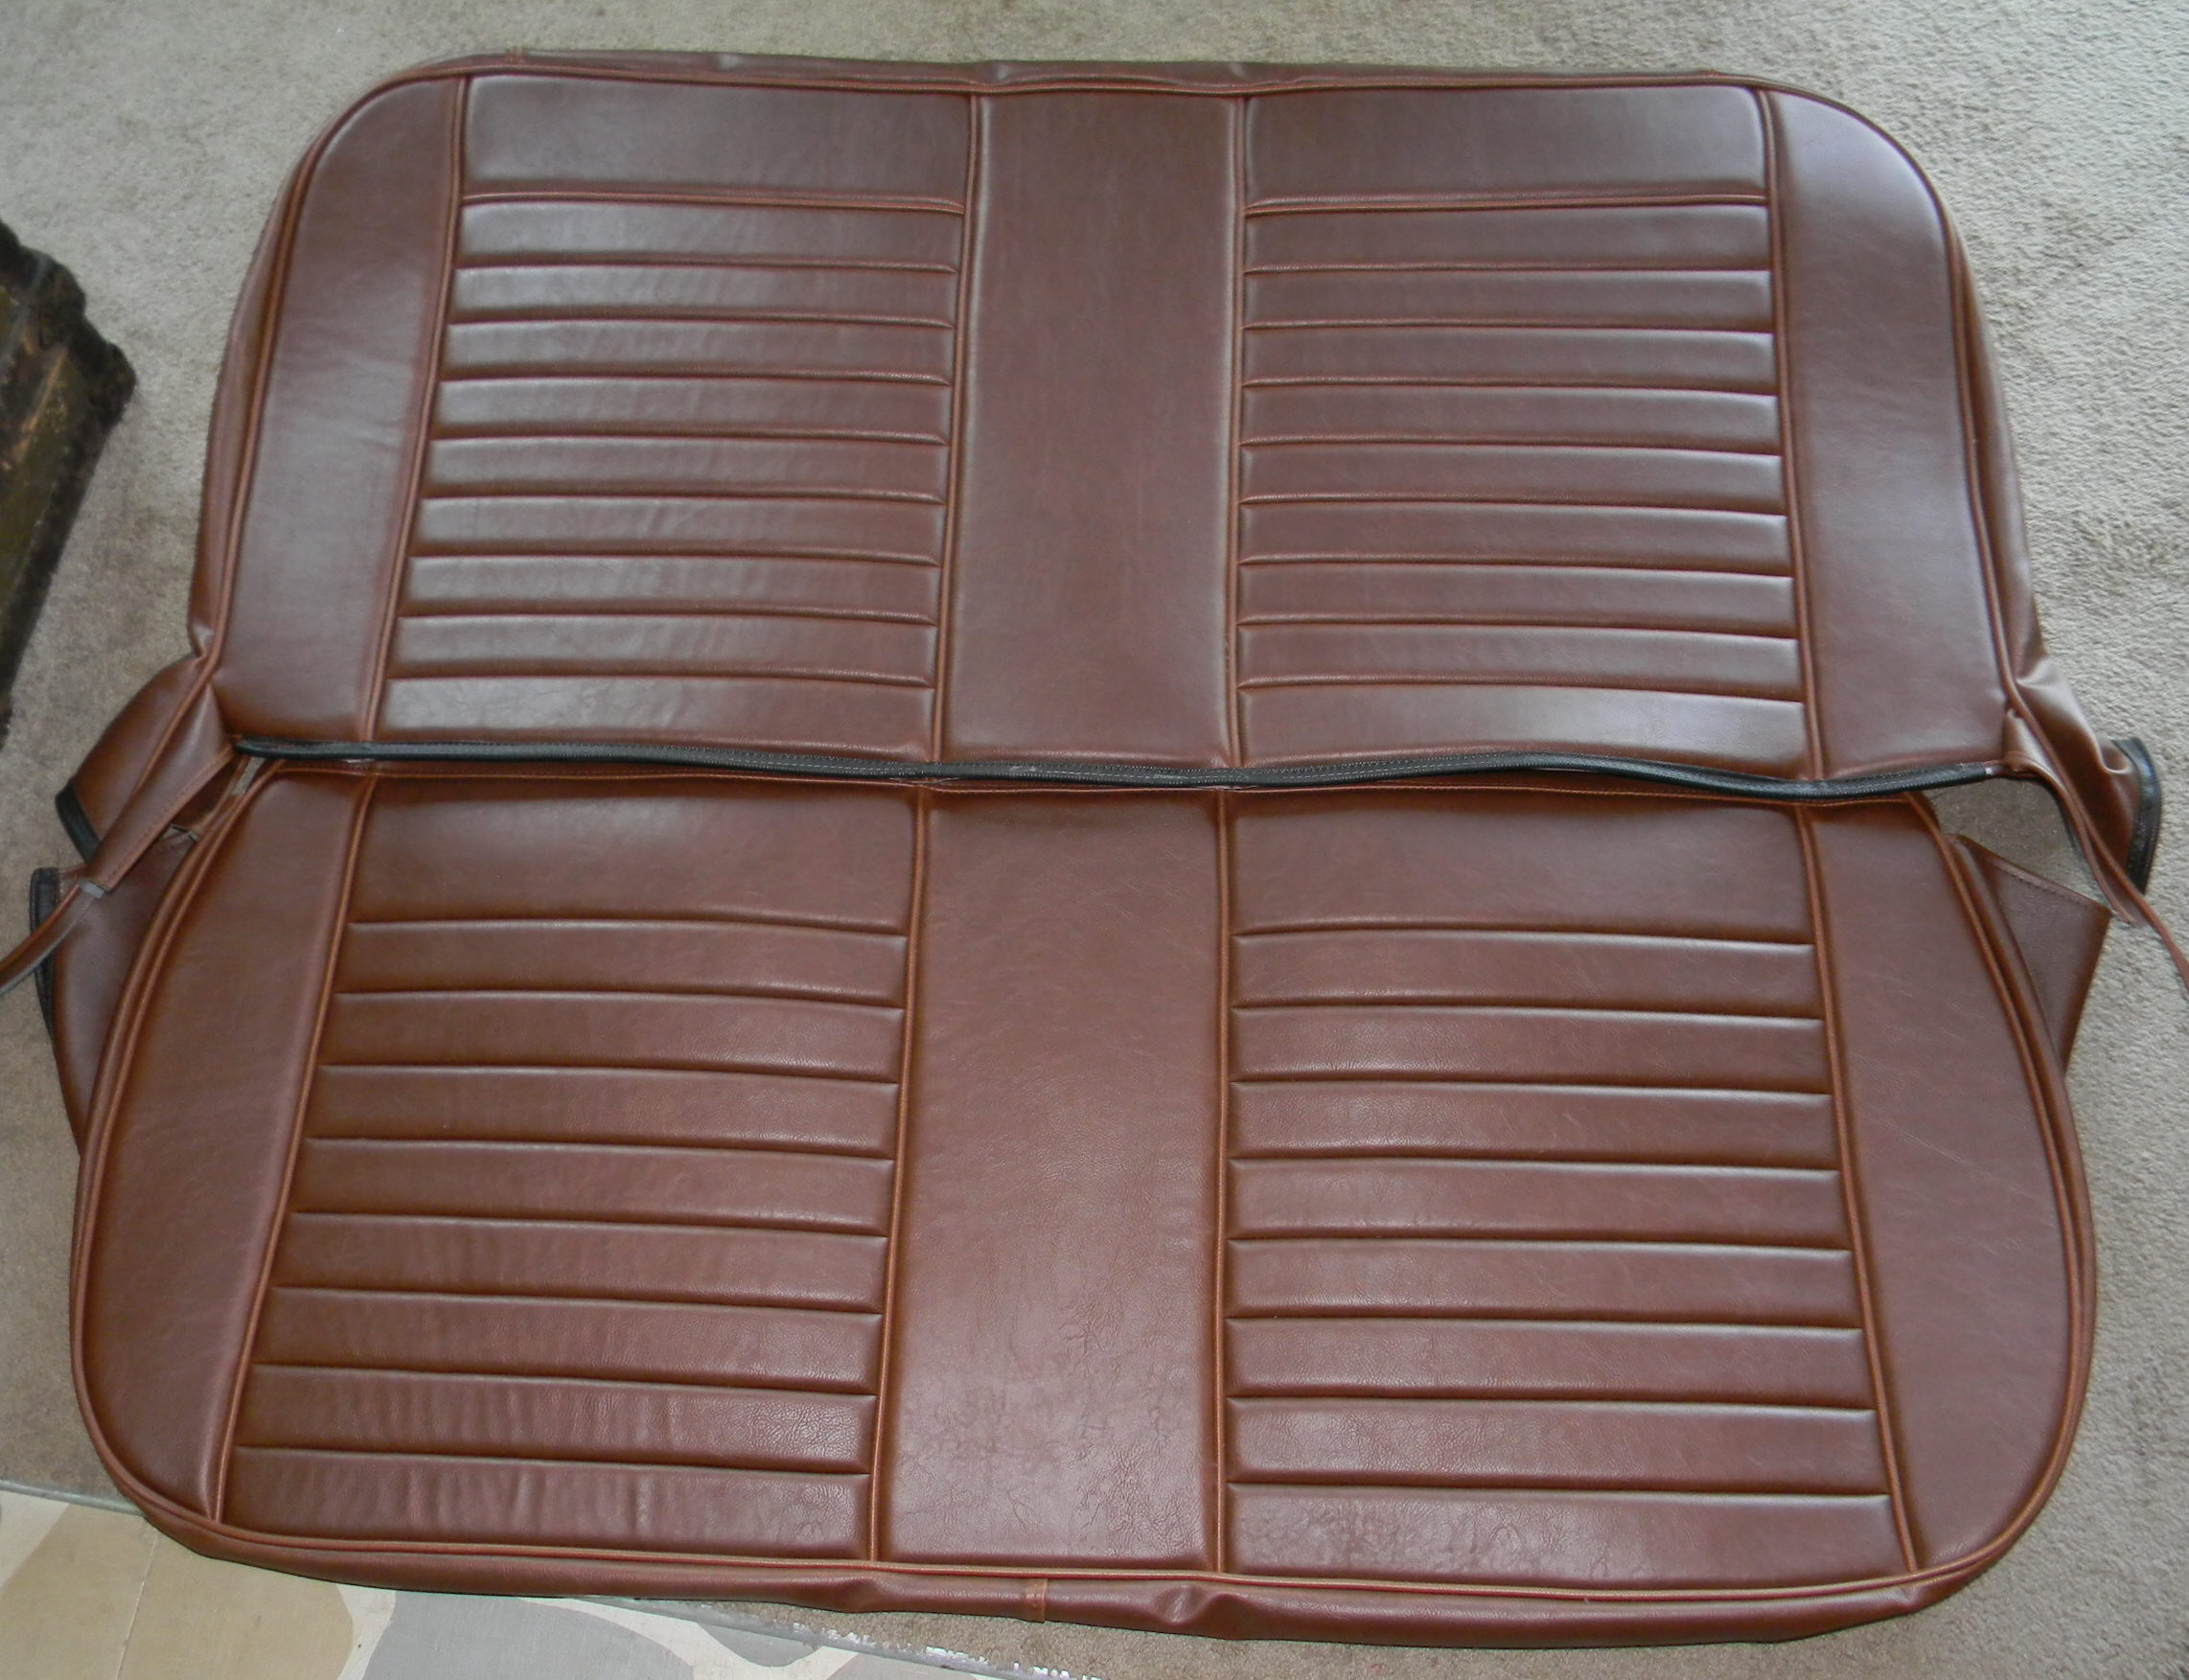 K5 Blazer Bench seat covers